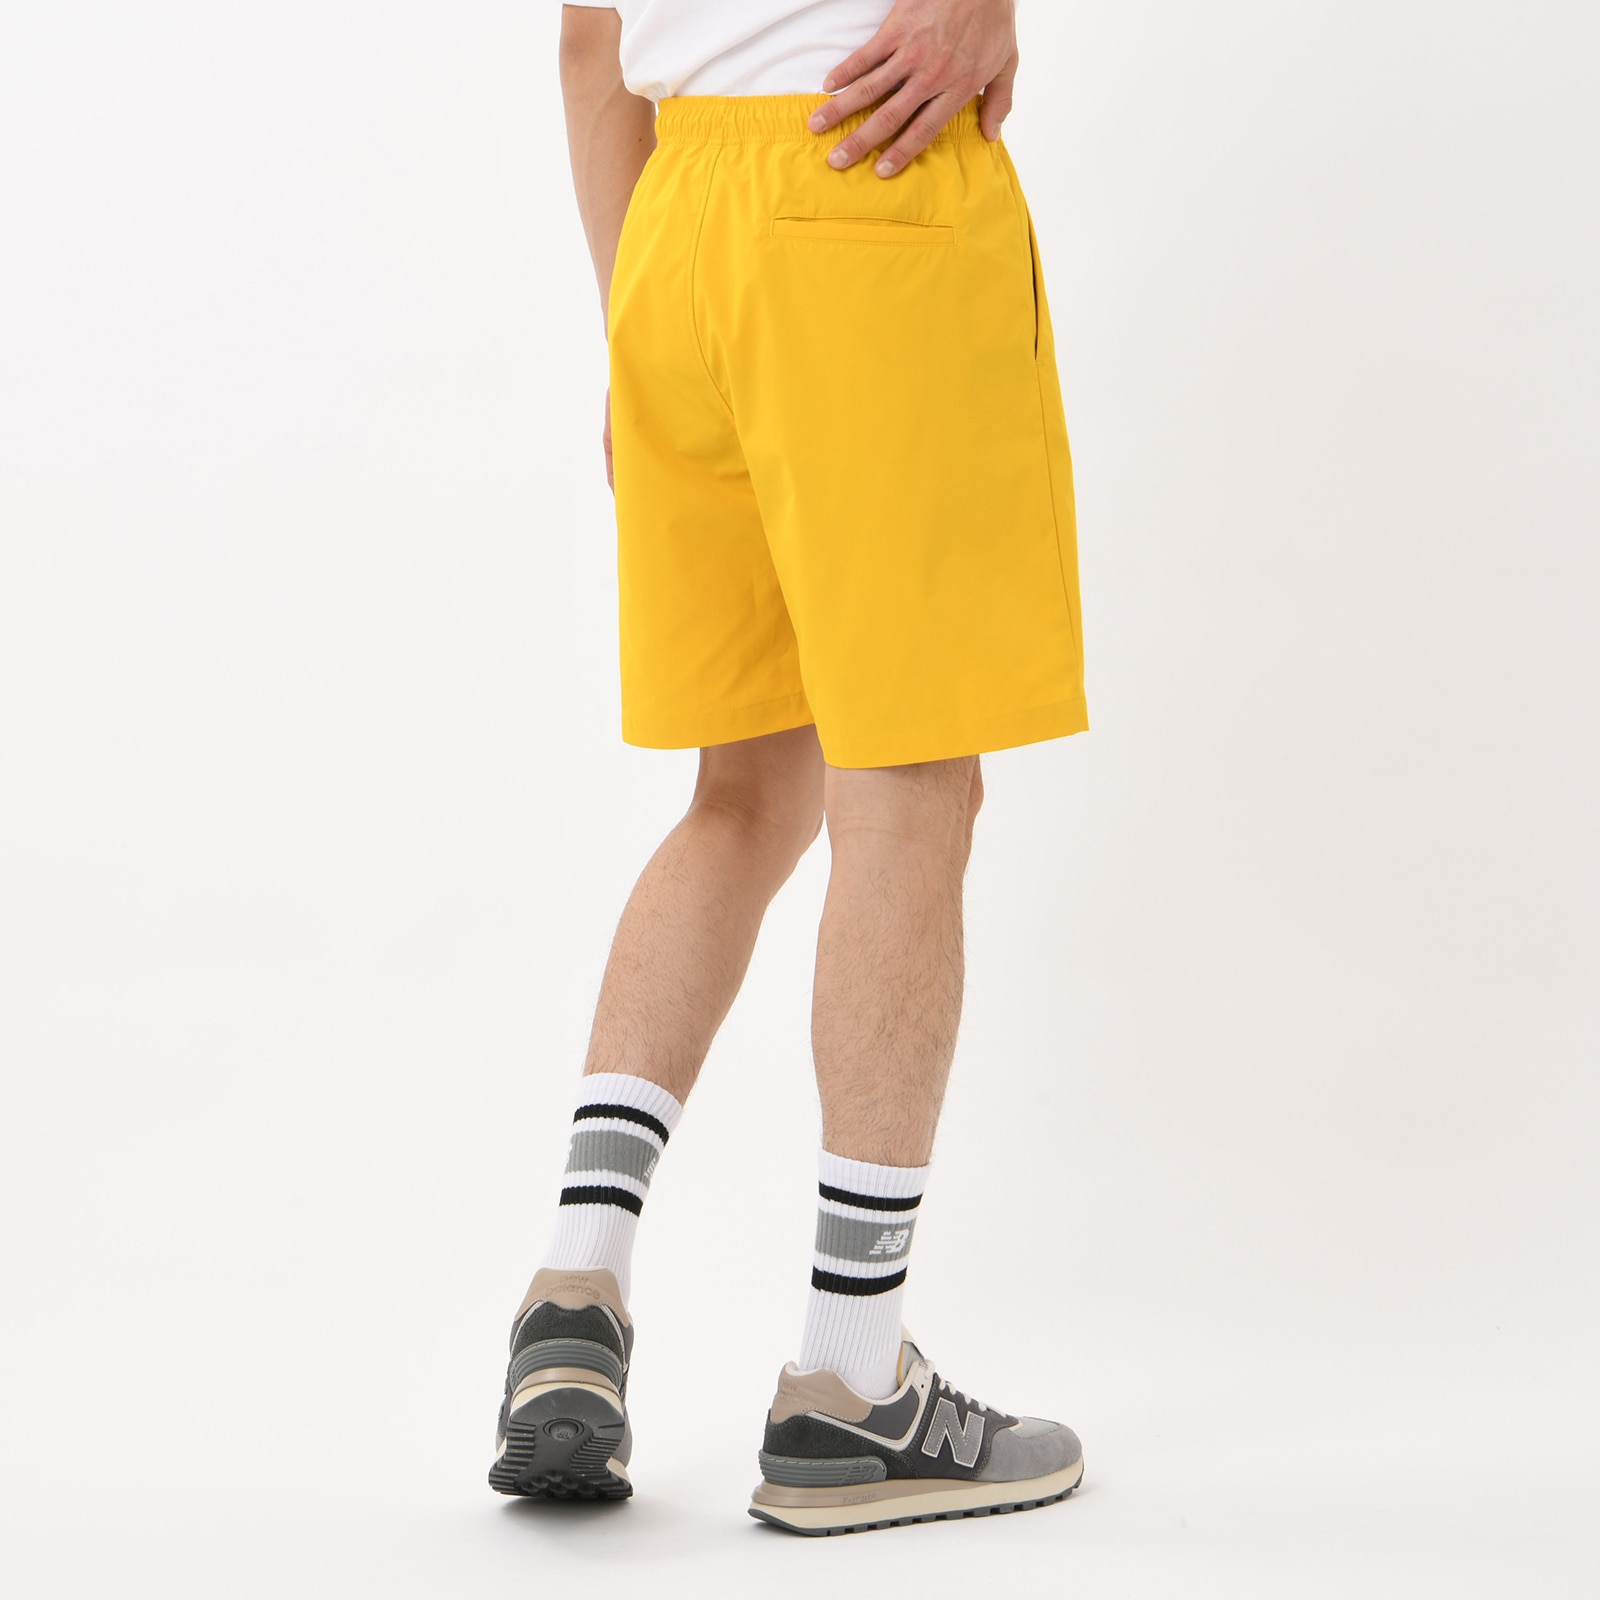 Woven color shorts